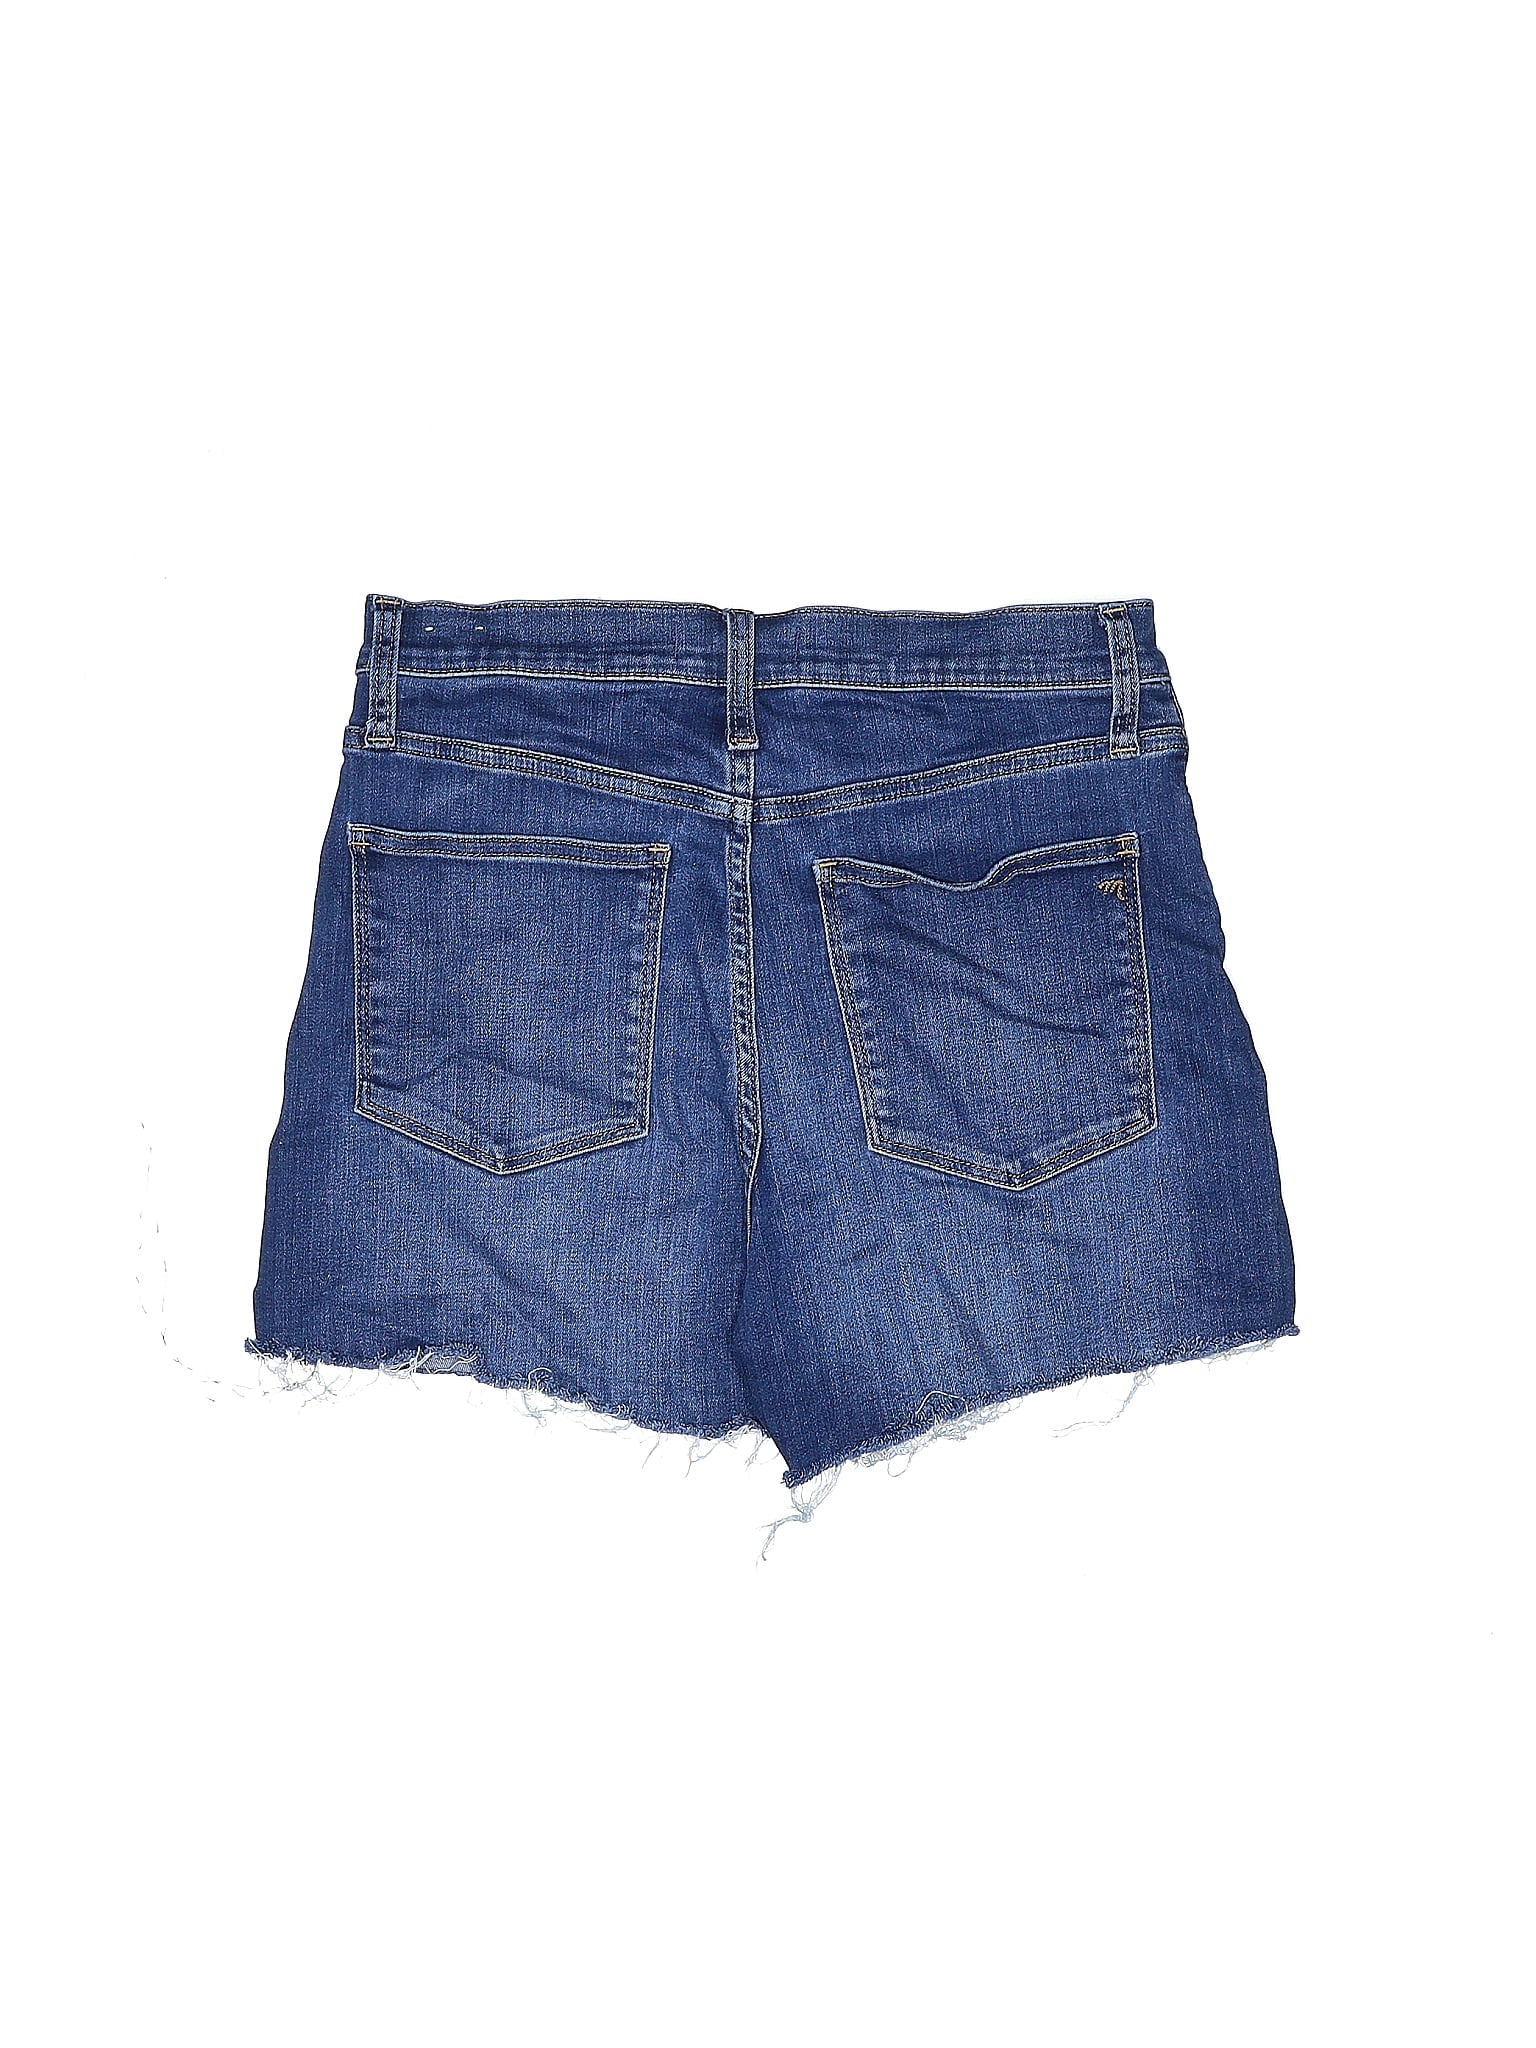 High-Rise Denim Shorts in Dark Wash waist size - 28